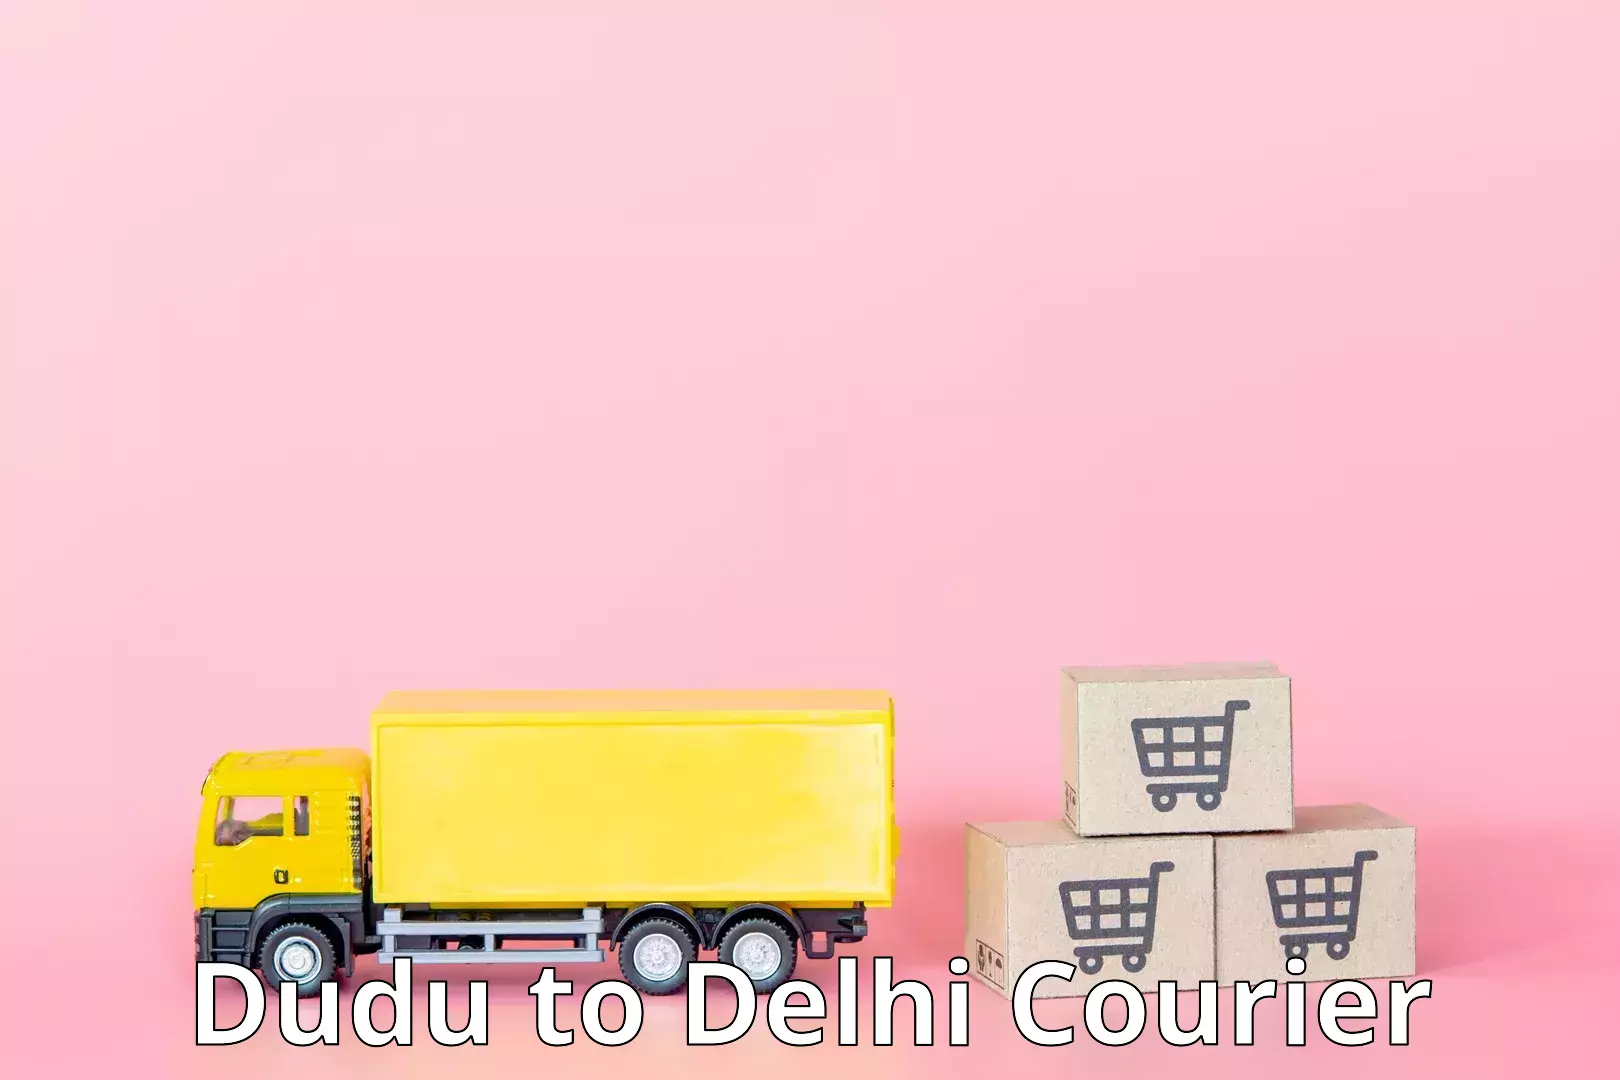 Advanced courier platforms Dudu to NCR